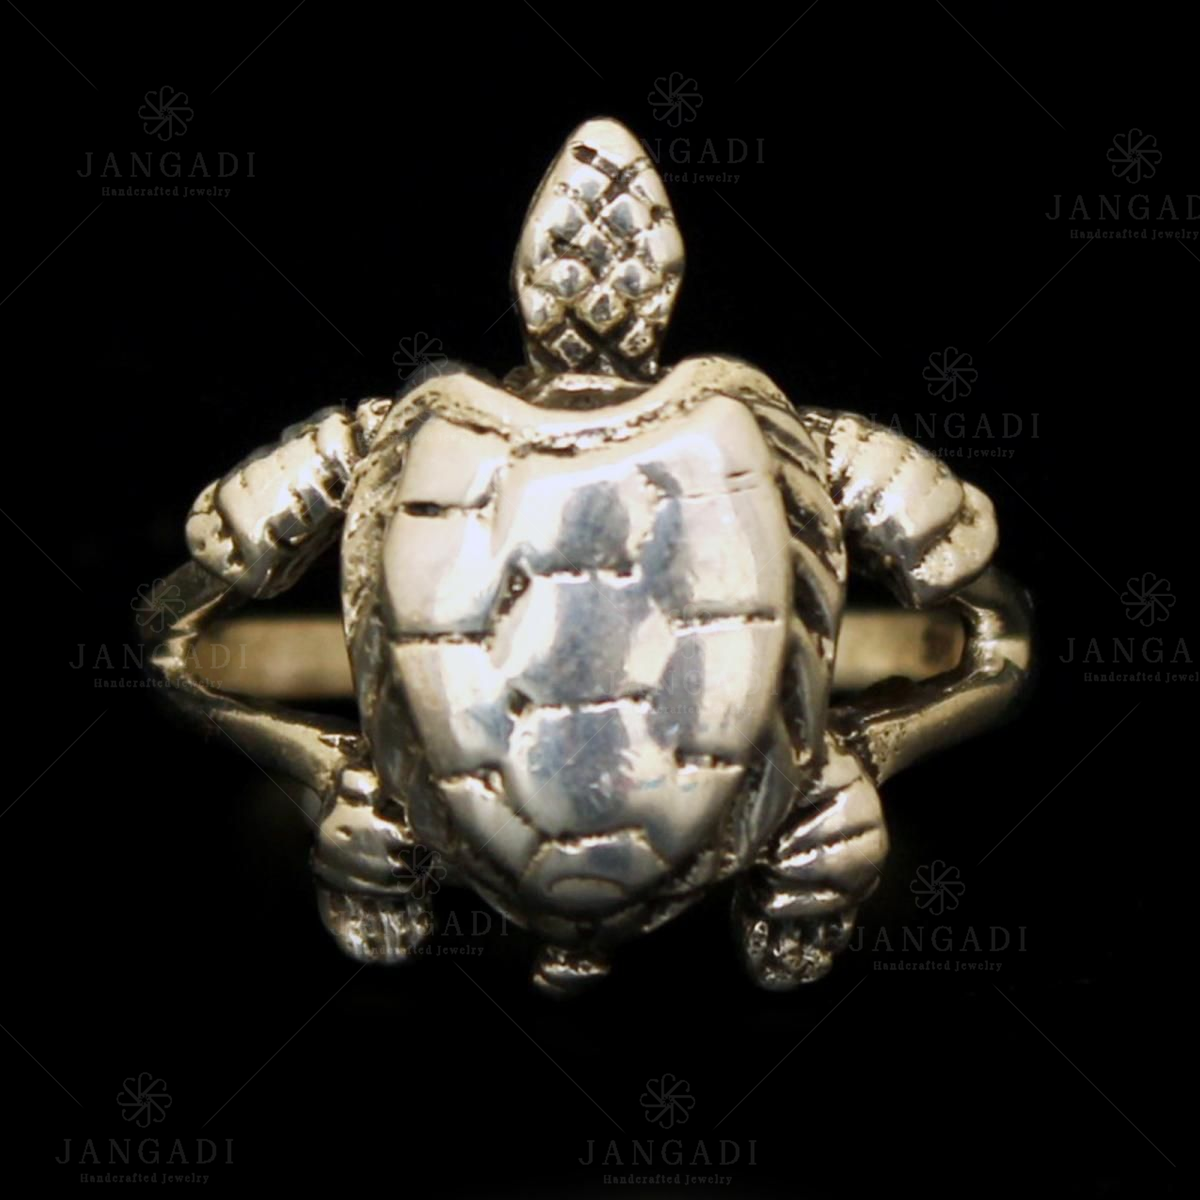 22K Gold 'Tortoise' Ring with Cz For Women - 235-GR6280 in 3.500 Grams